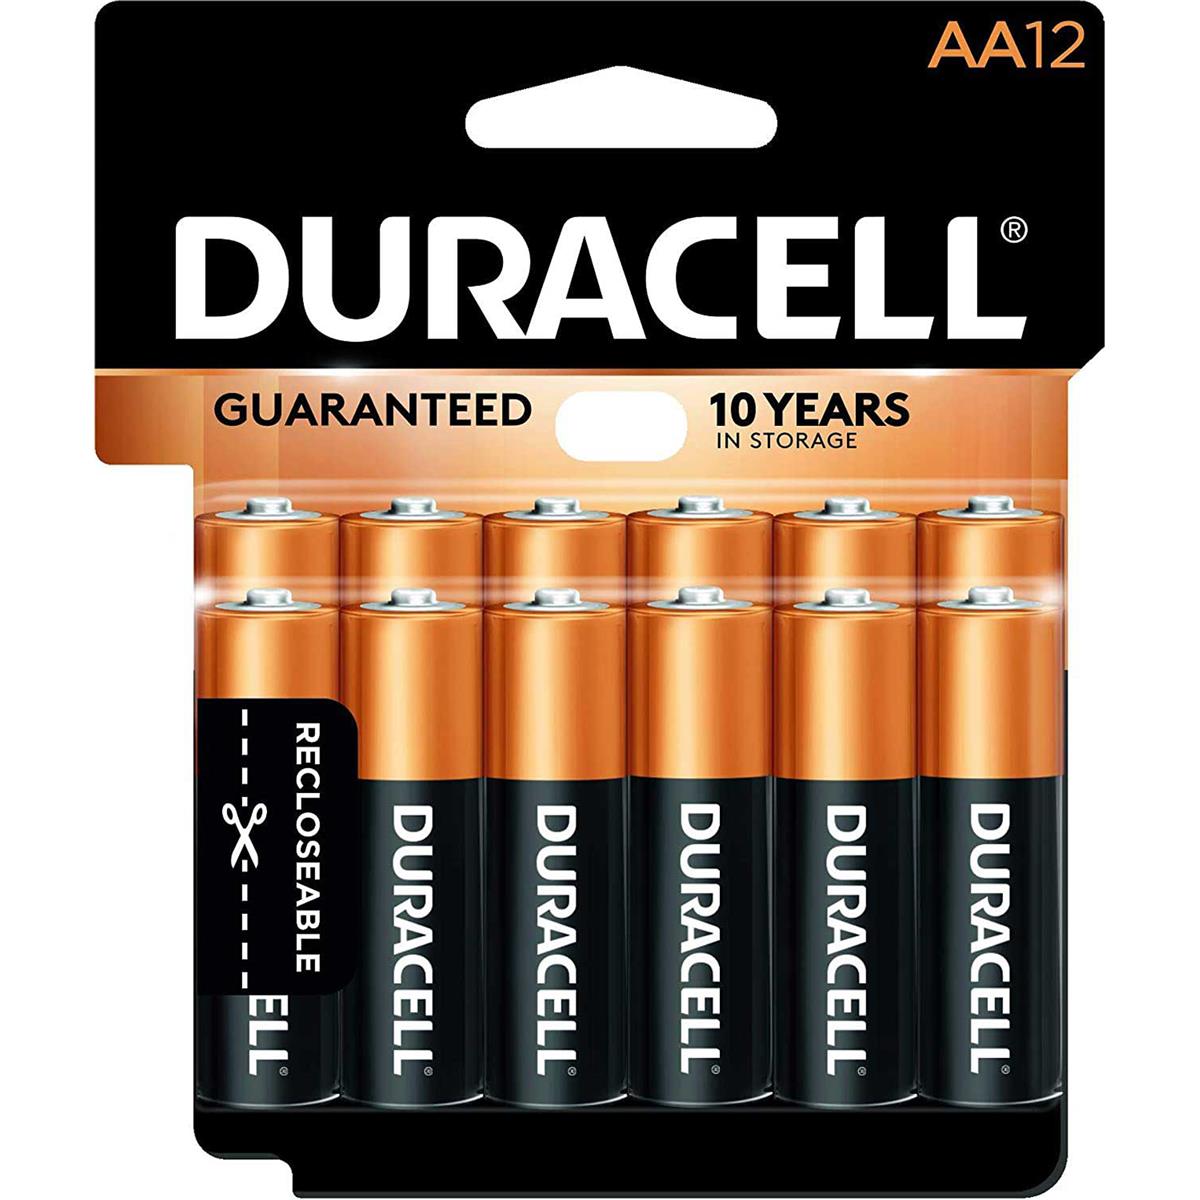 

Duracell CopperTop AA Alkaline Battery, 12-Pack